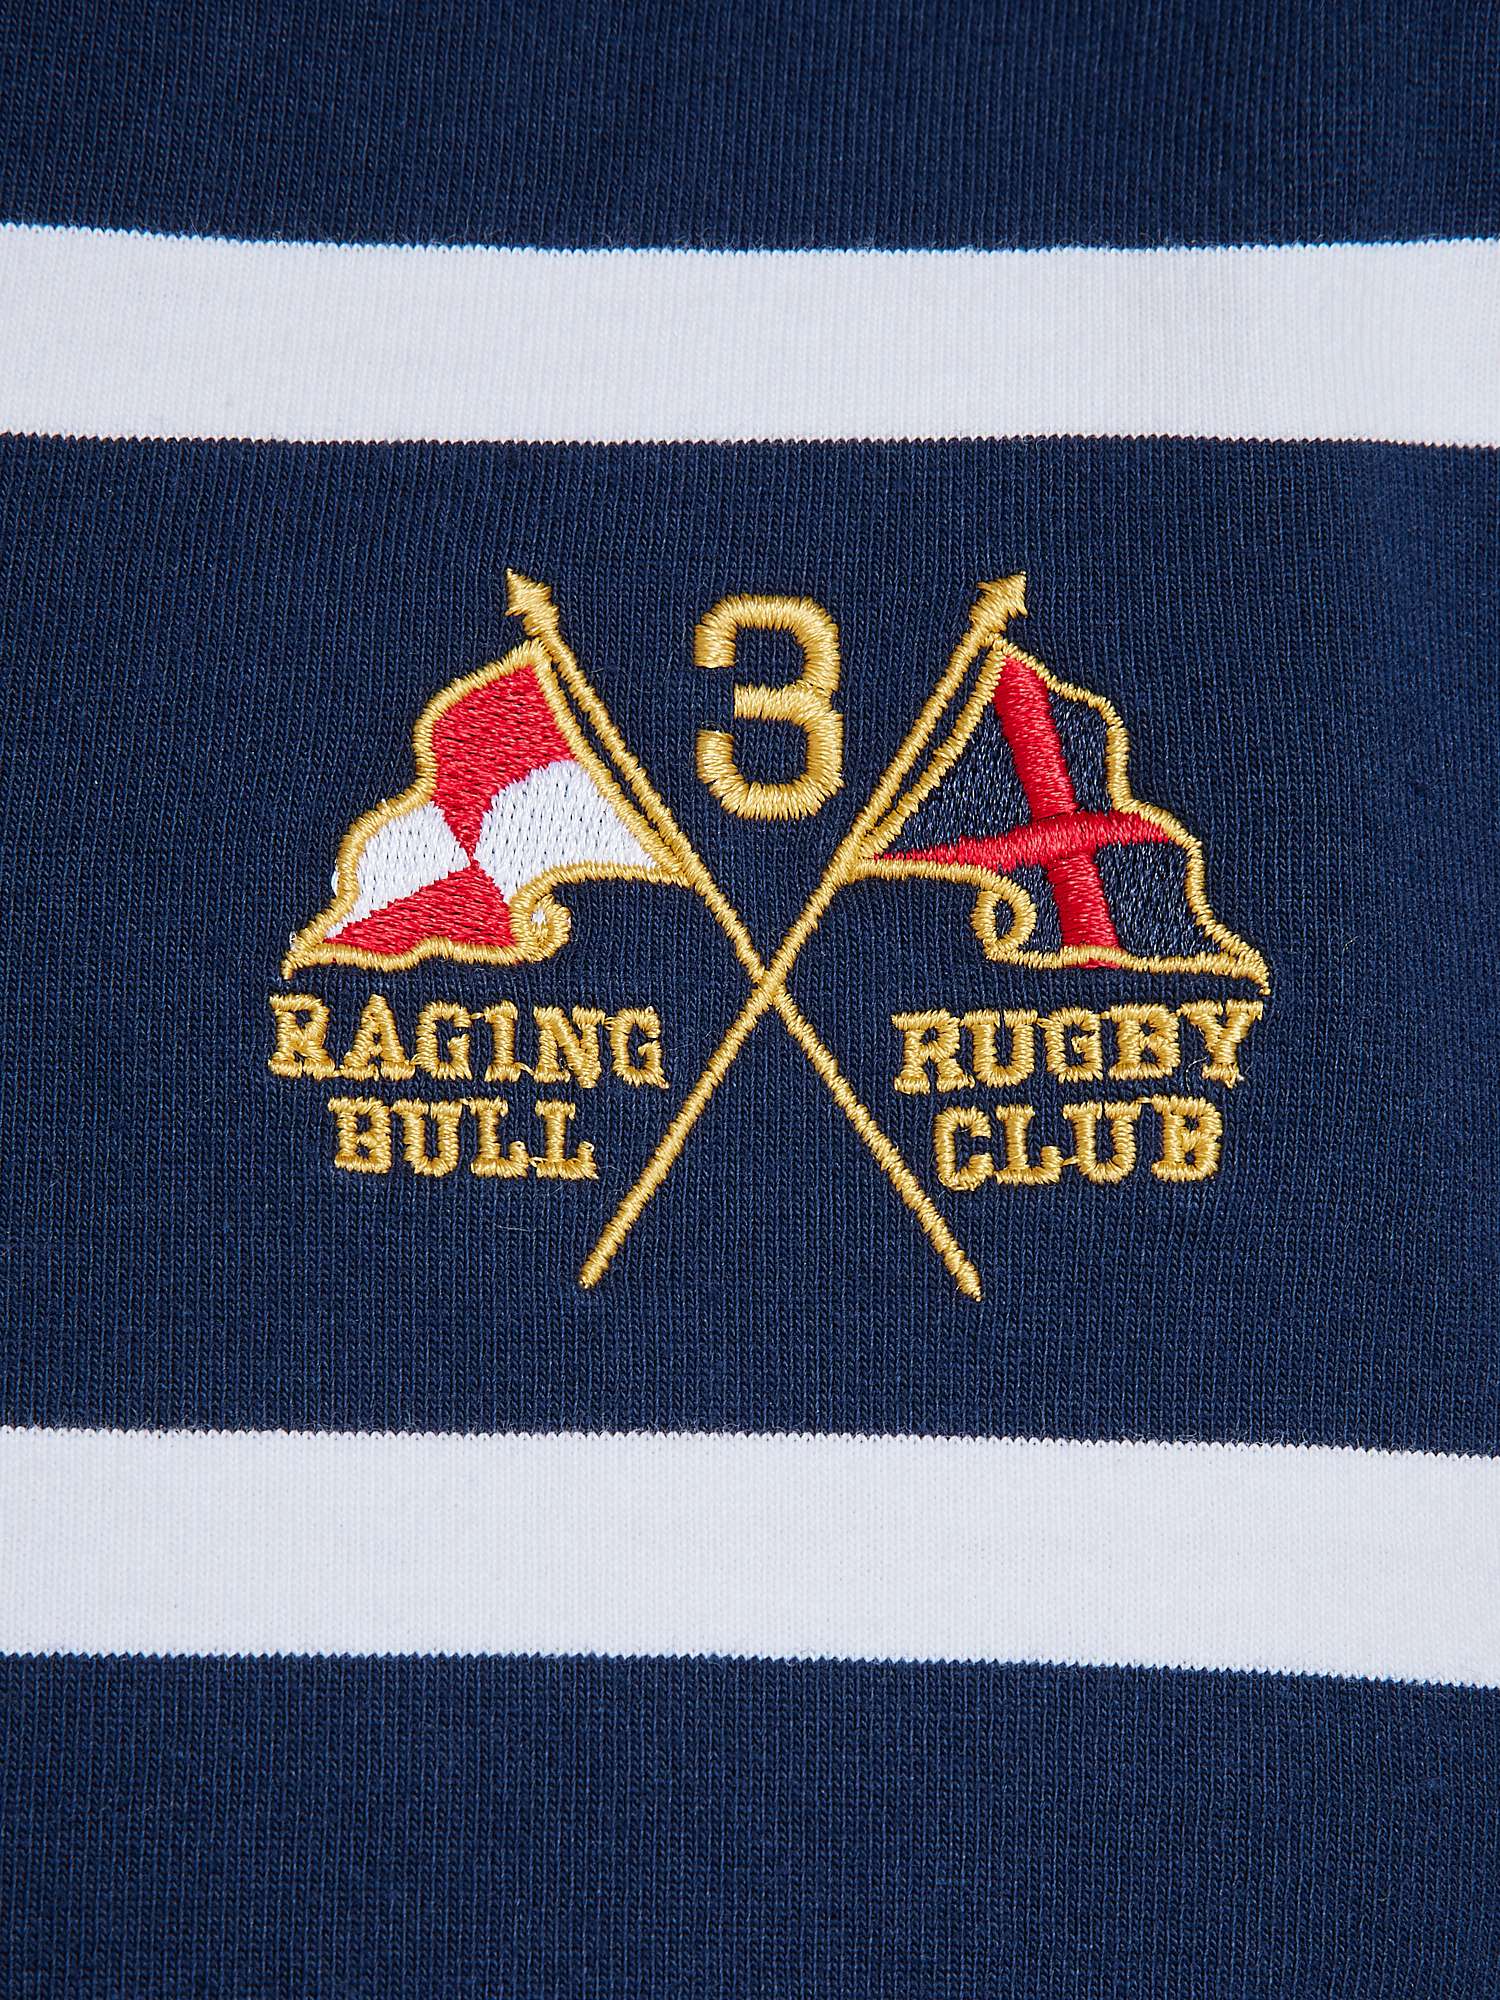 Buy Raging Bull Short Sleeve Fine Stripe Rugby Top, Navy/White Online at johnlewis.com